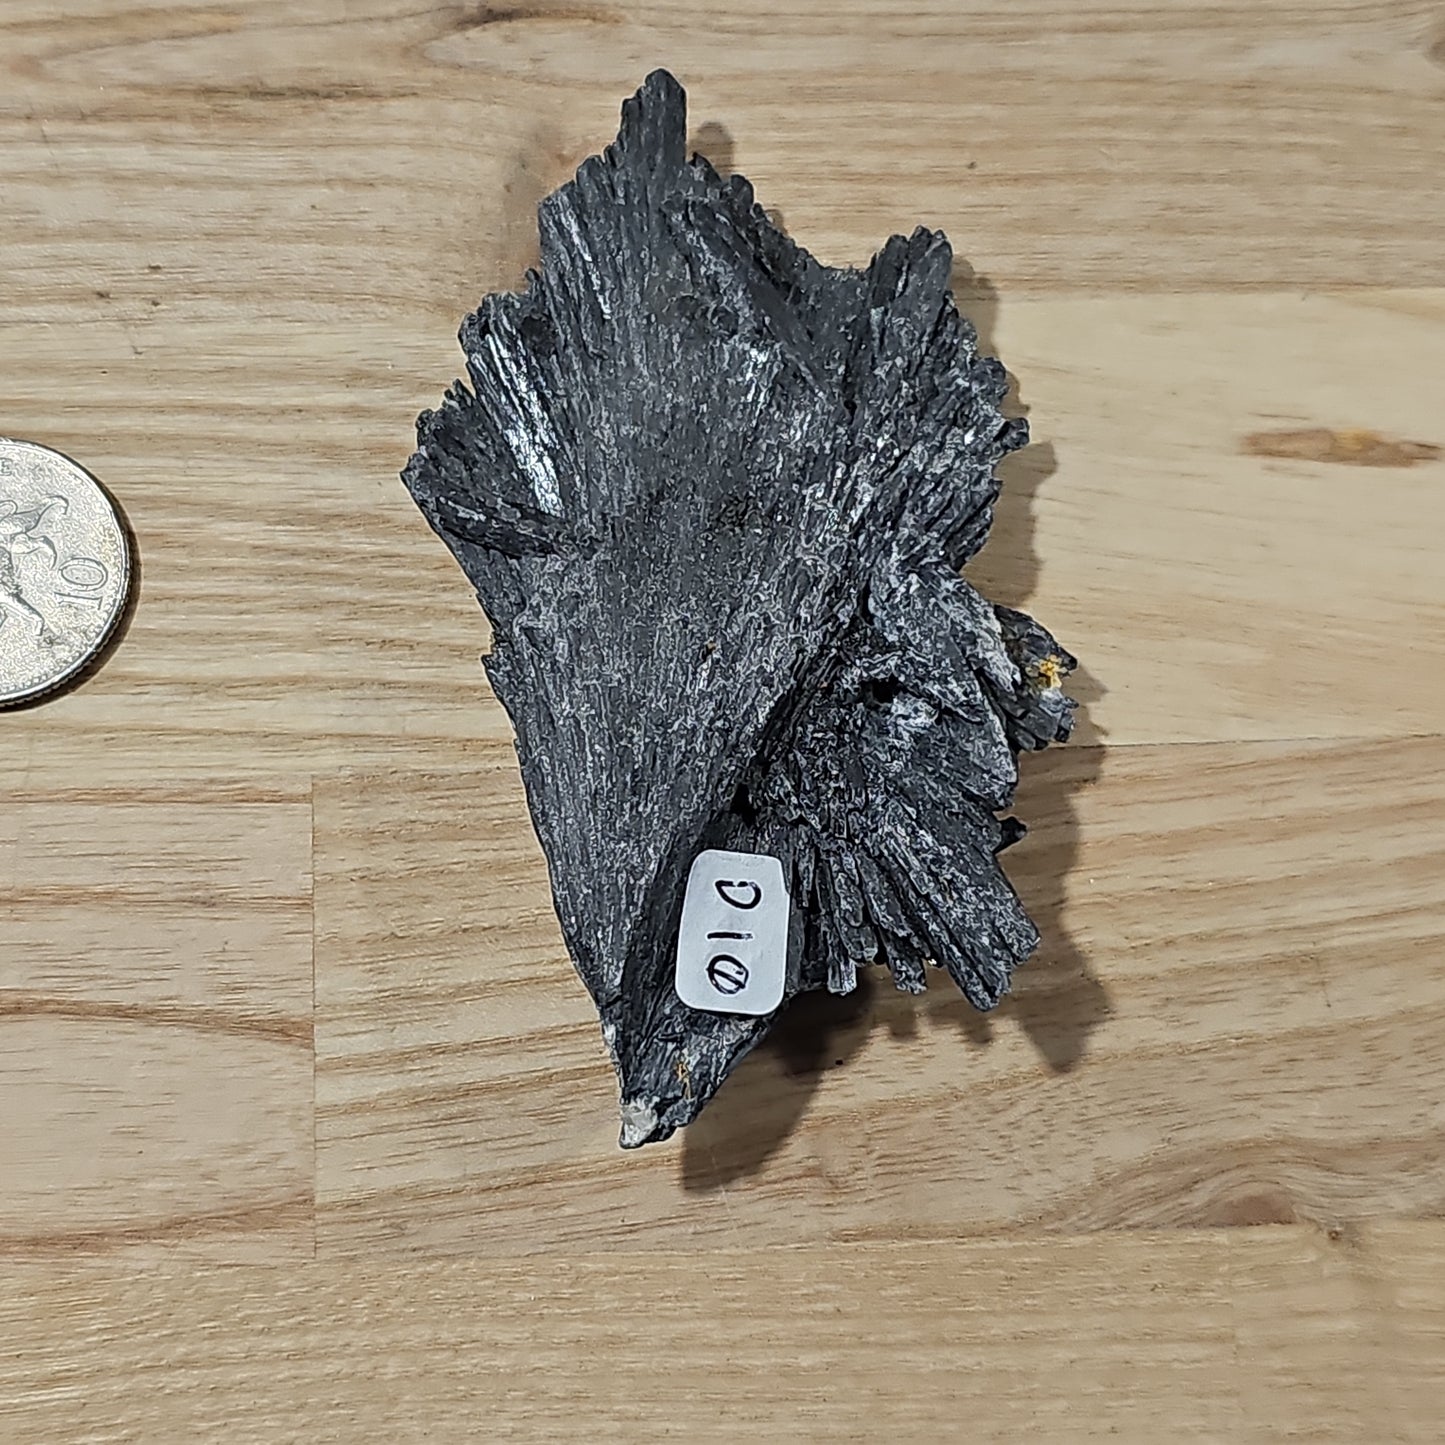 Black Kyanite - Raw pieces